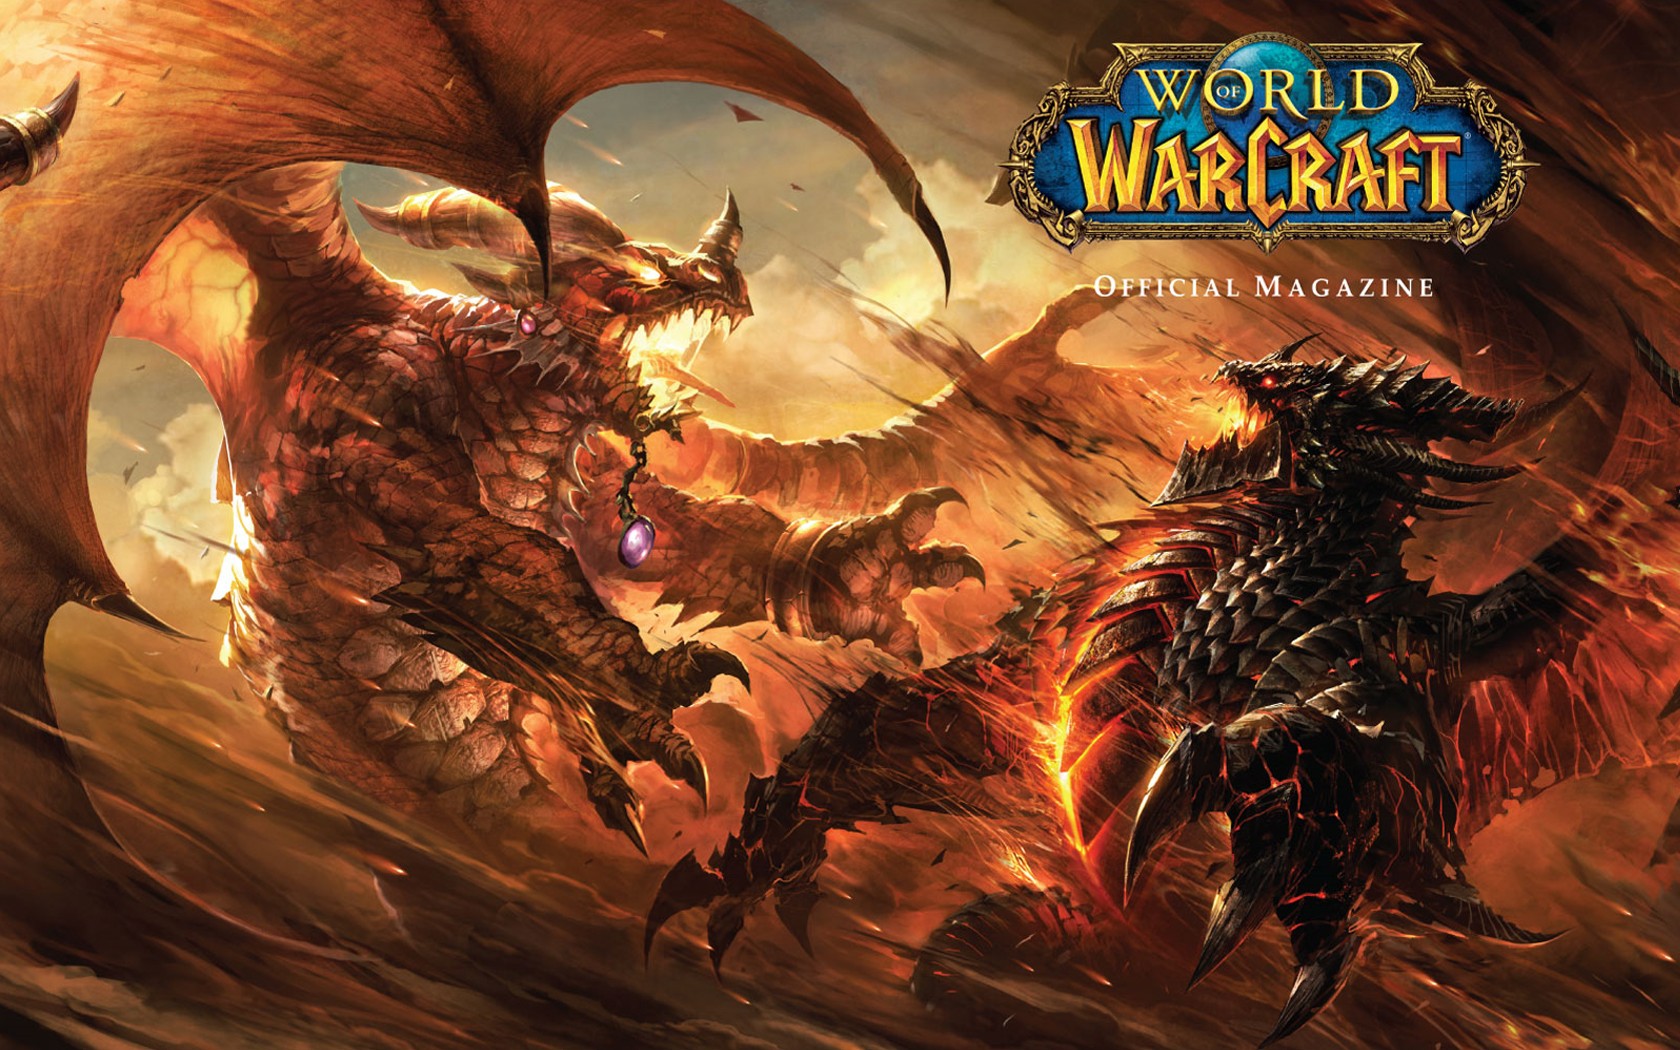 General 1680x1050 World of Warcraft Deathwing Alexstraza Alexstrasza PC gaming video game art fantasy art creature